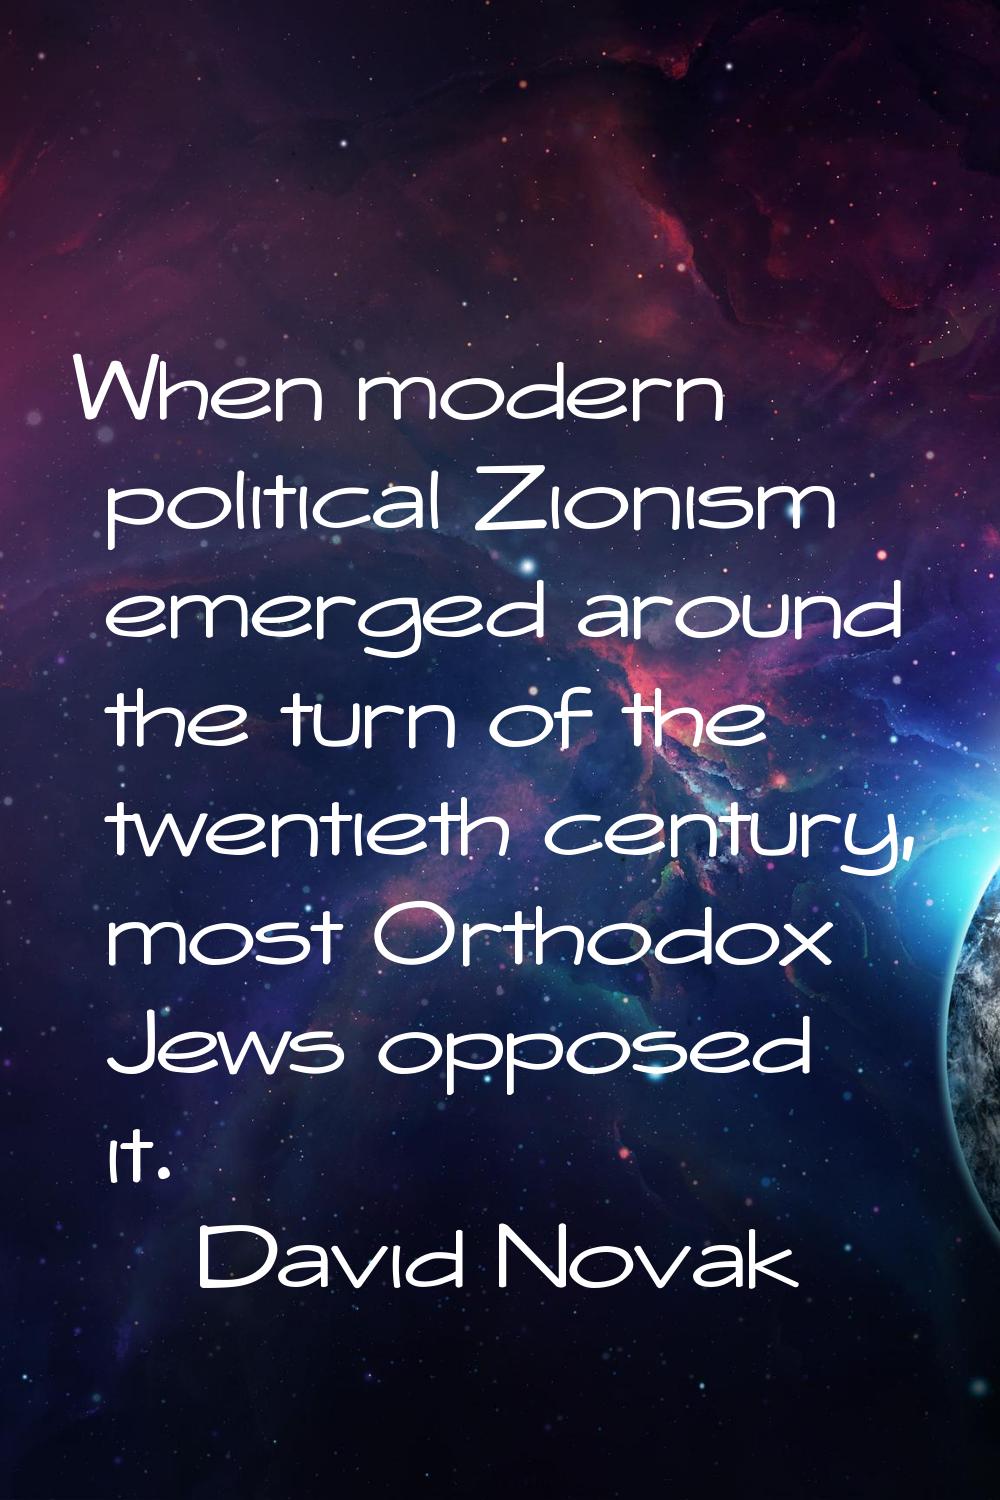 When modern political Zionism emerged around the turn of the twentieth century, most Orthodox Jews 